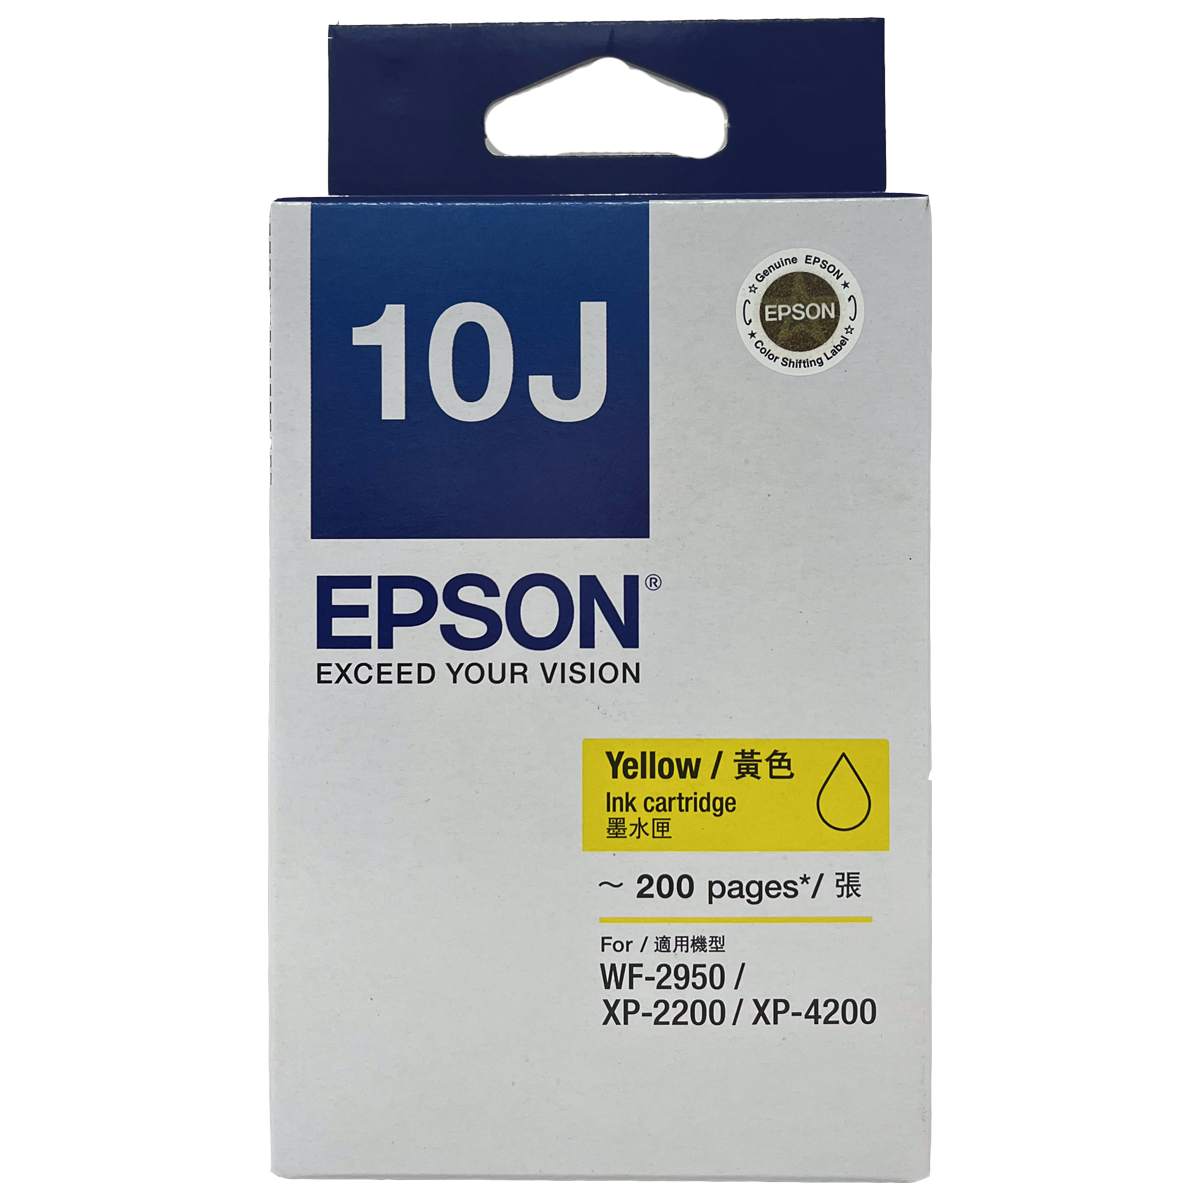 Epson 10J Yellow Ink Cartridge 黃色墨水匣 #C13T10J483